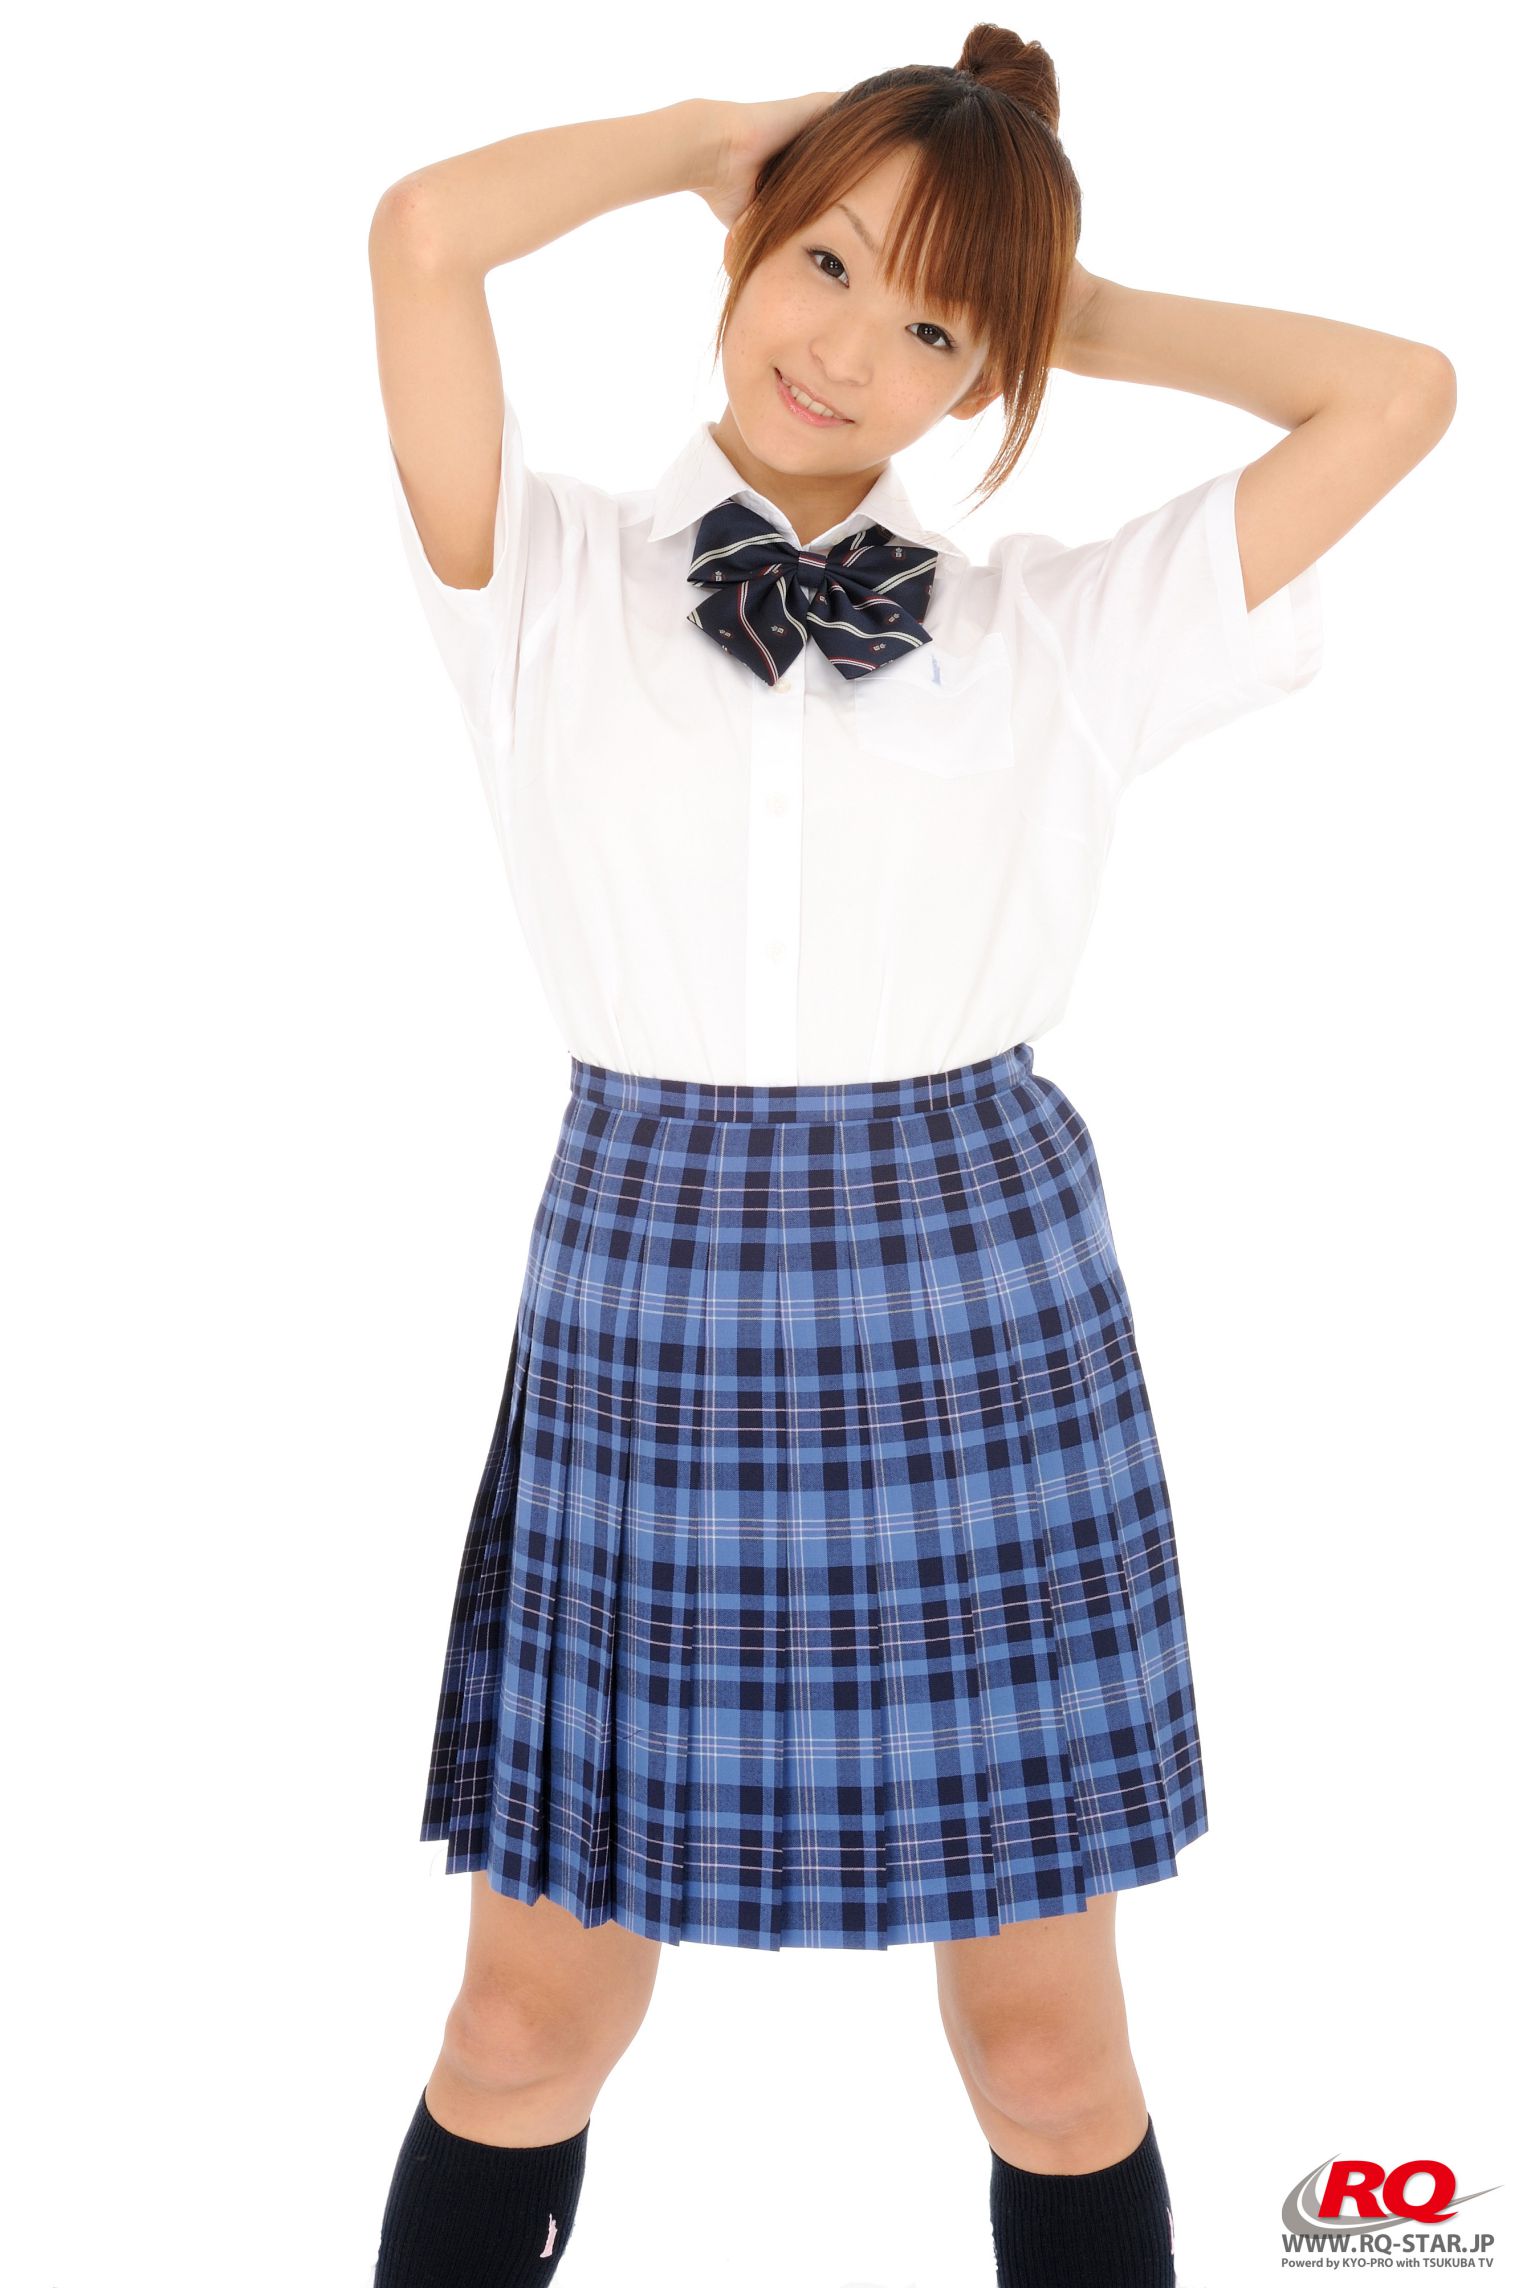 [Rq-star] No.00089 MIO AOKI green wood uncommon seifuku school uniform series